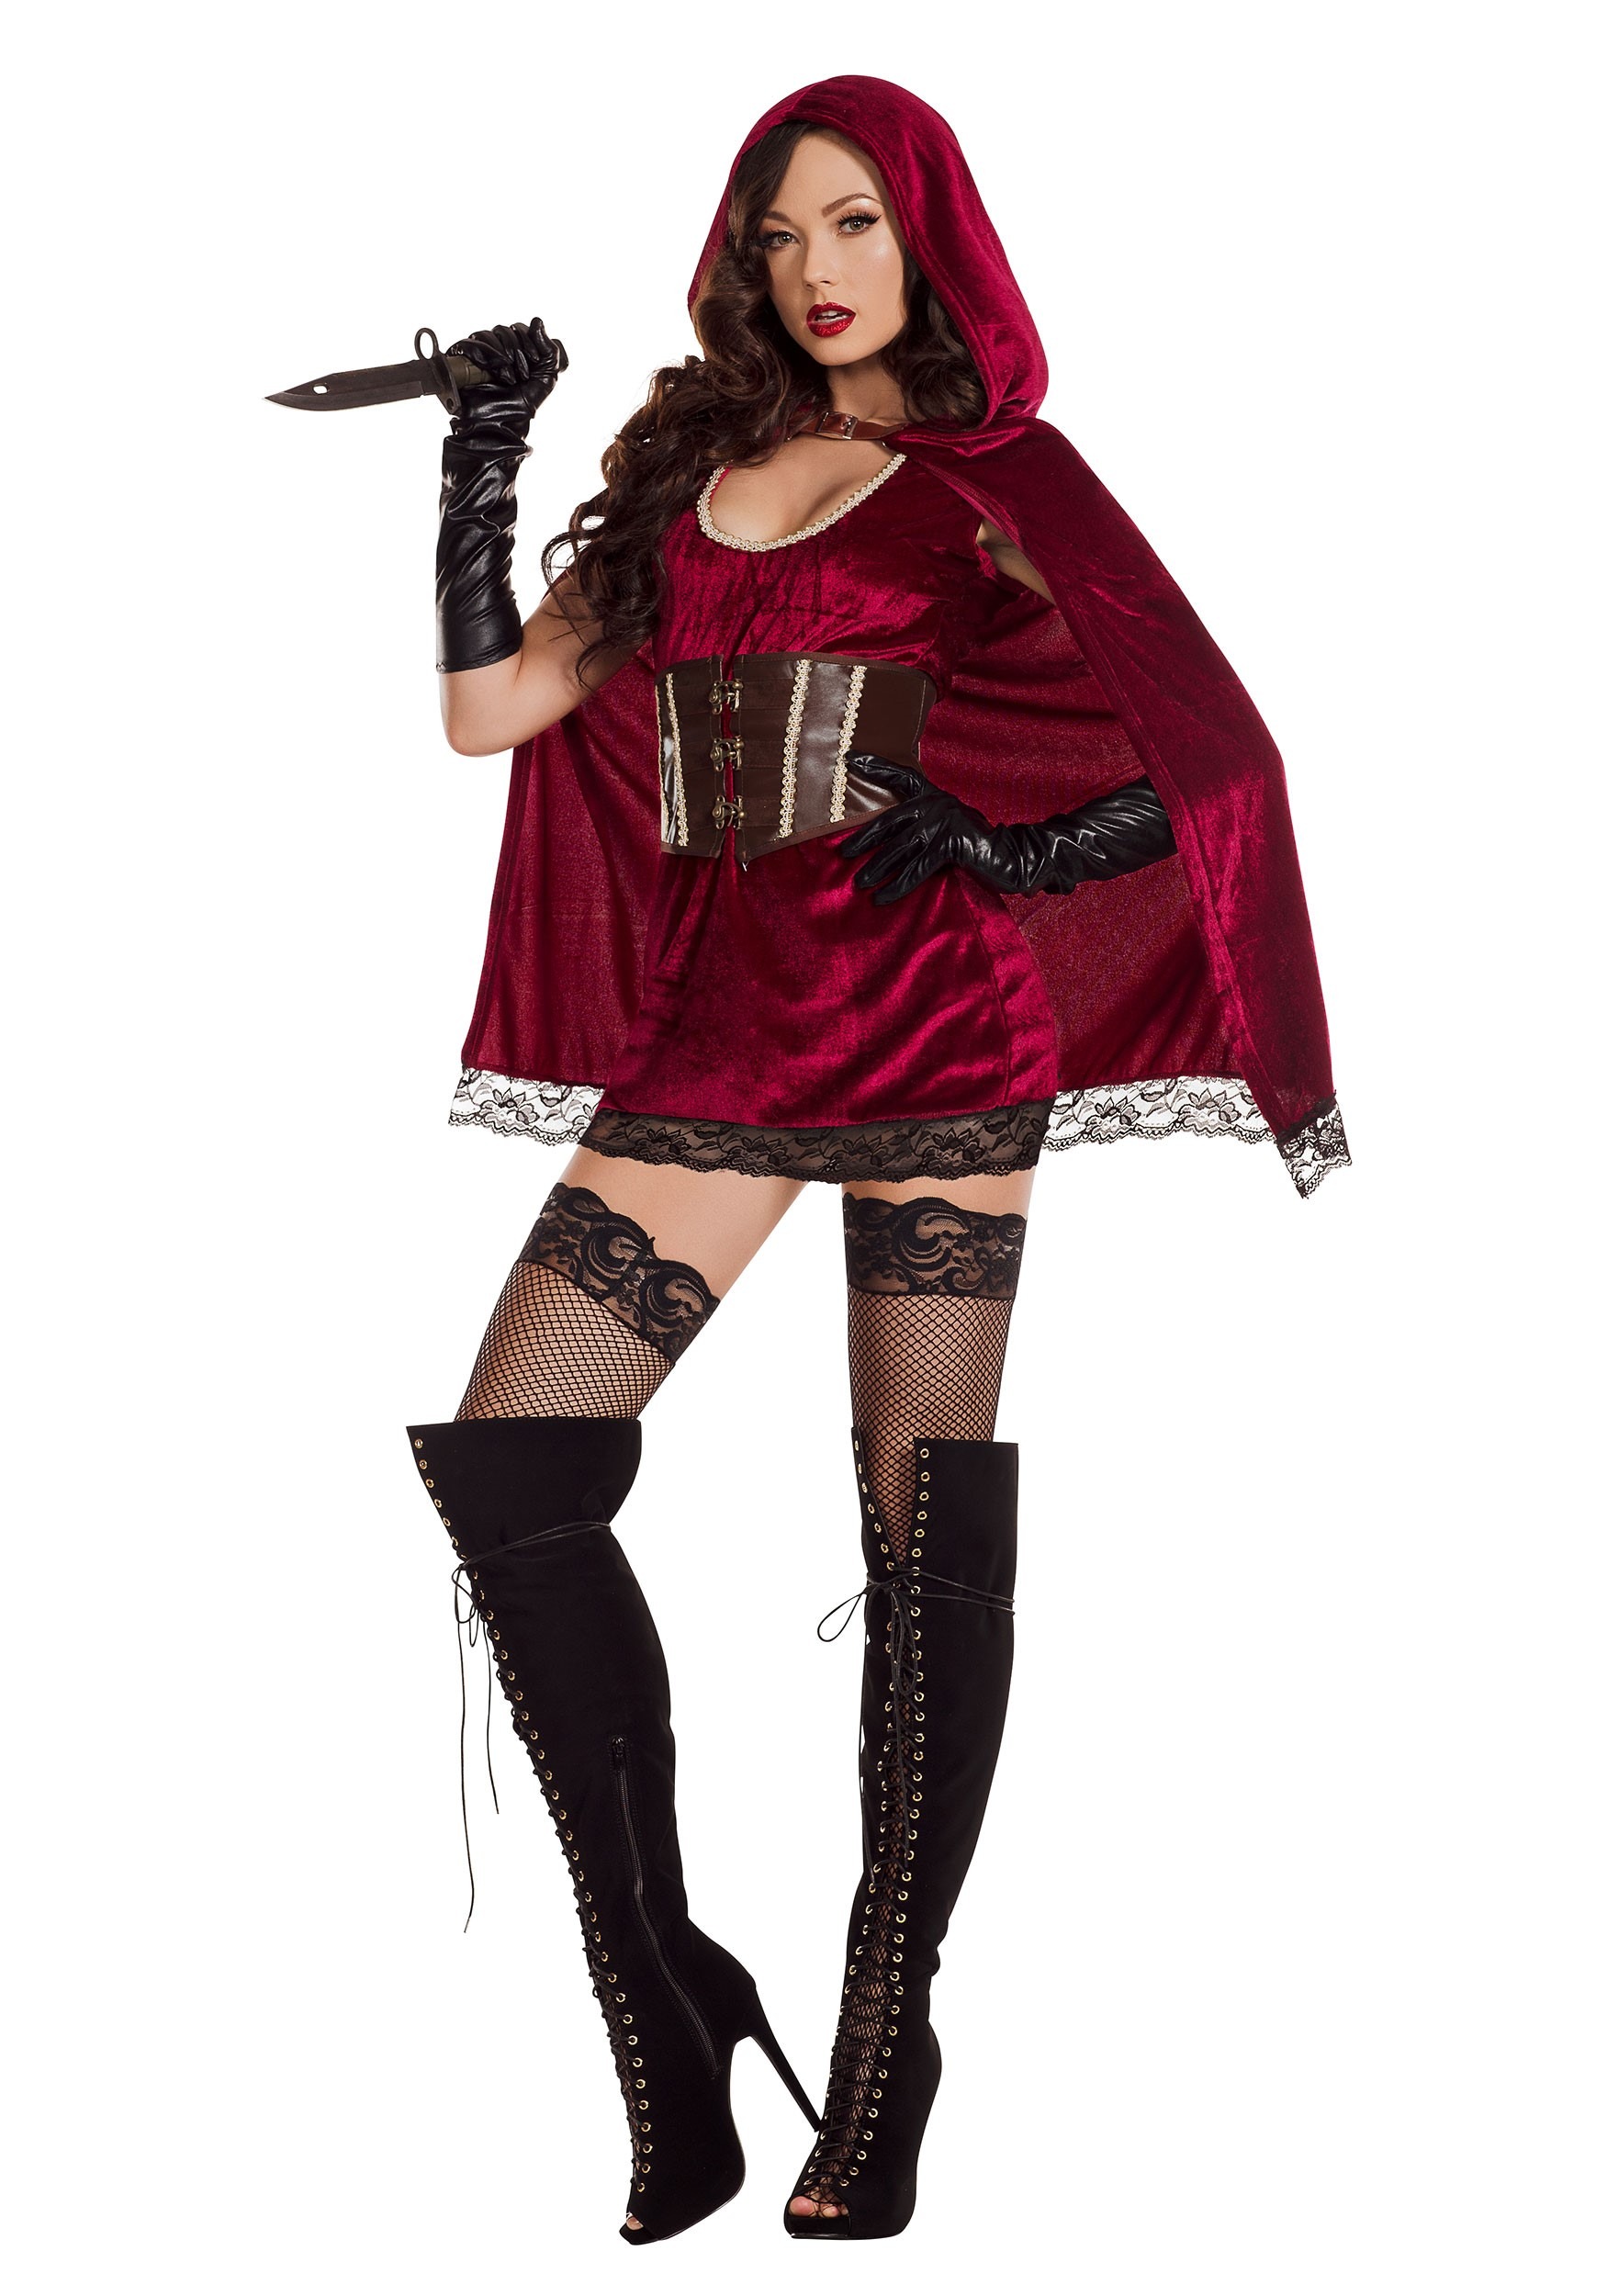 Little Red Riding Hood Halloween Costume for Women